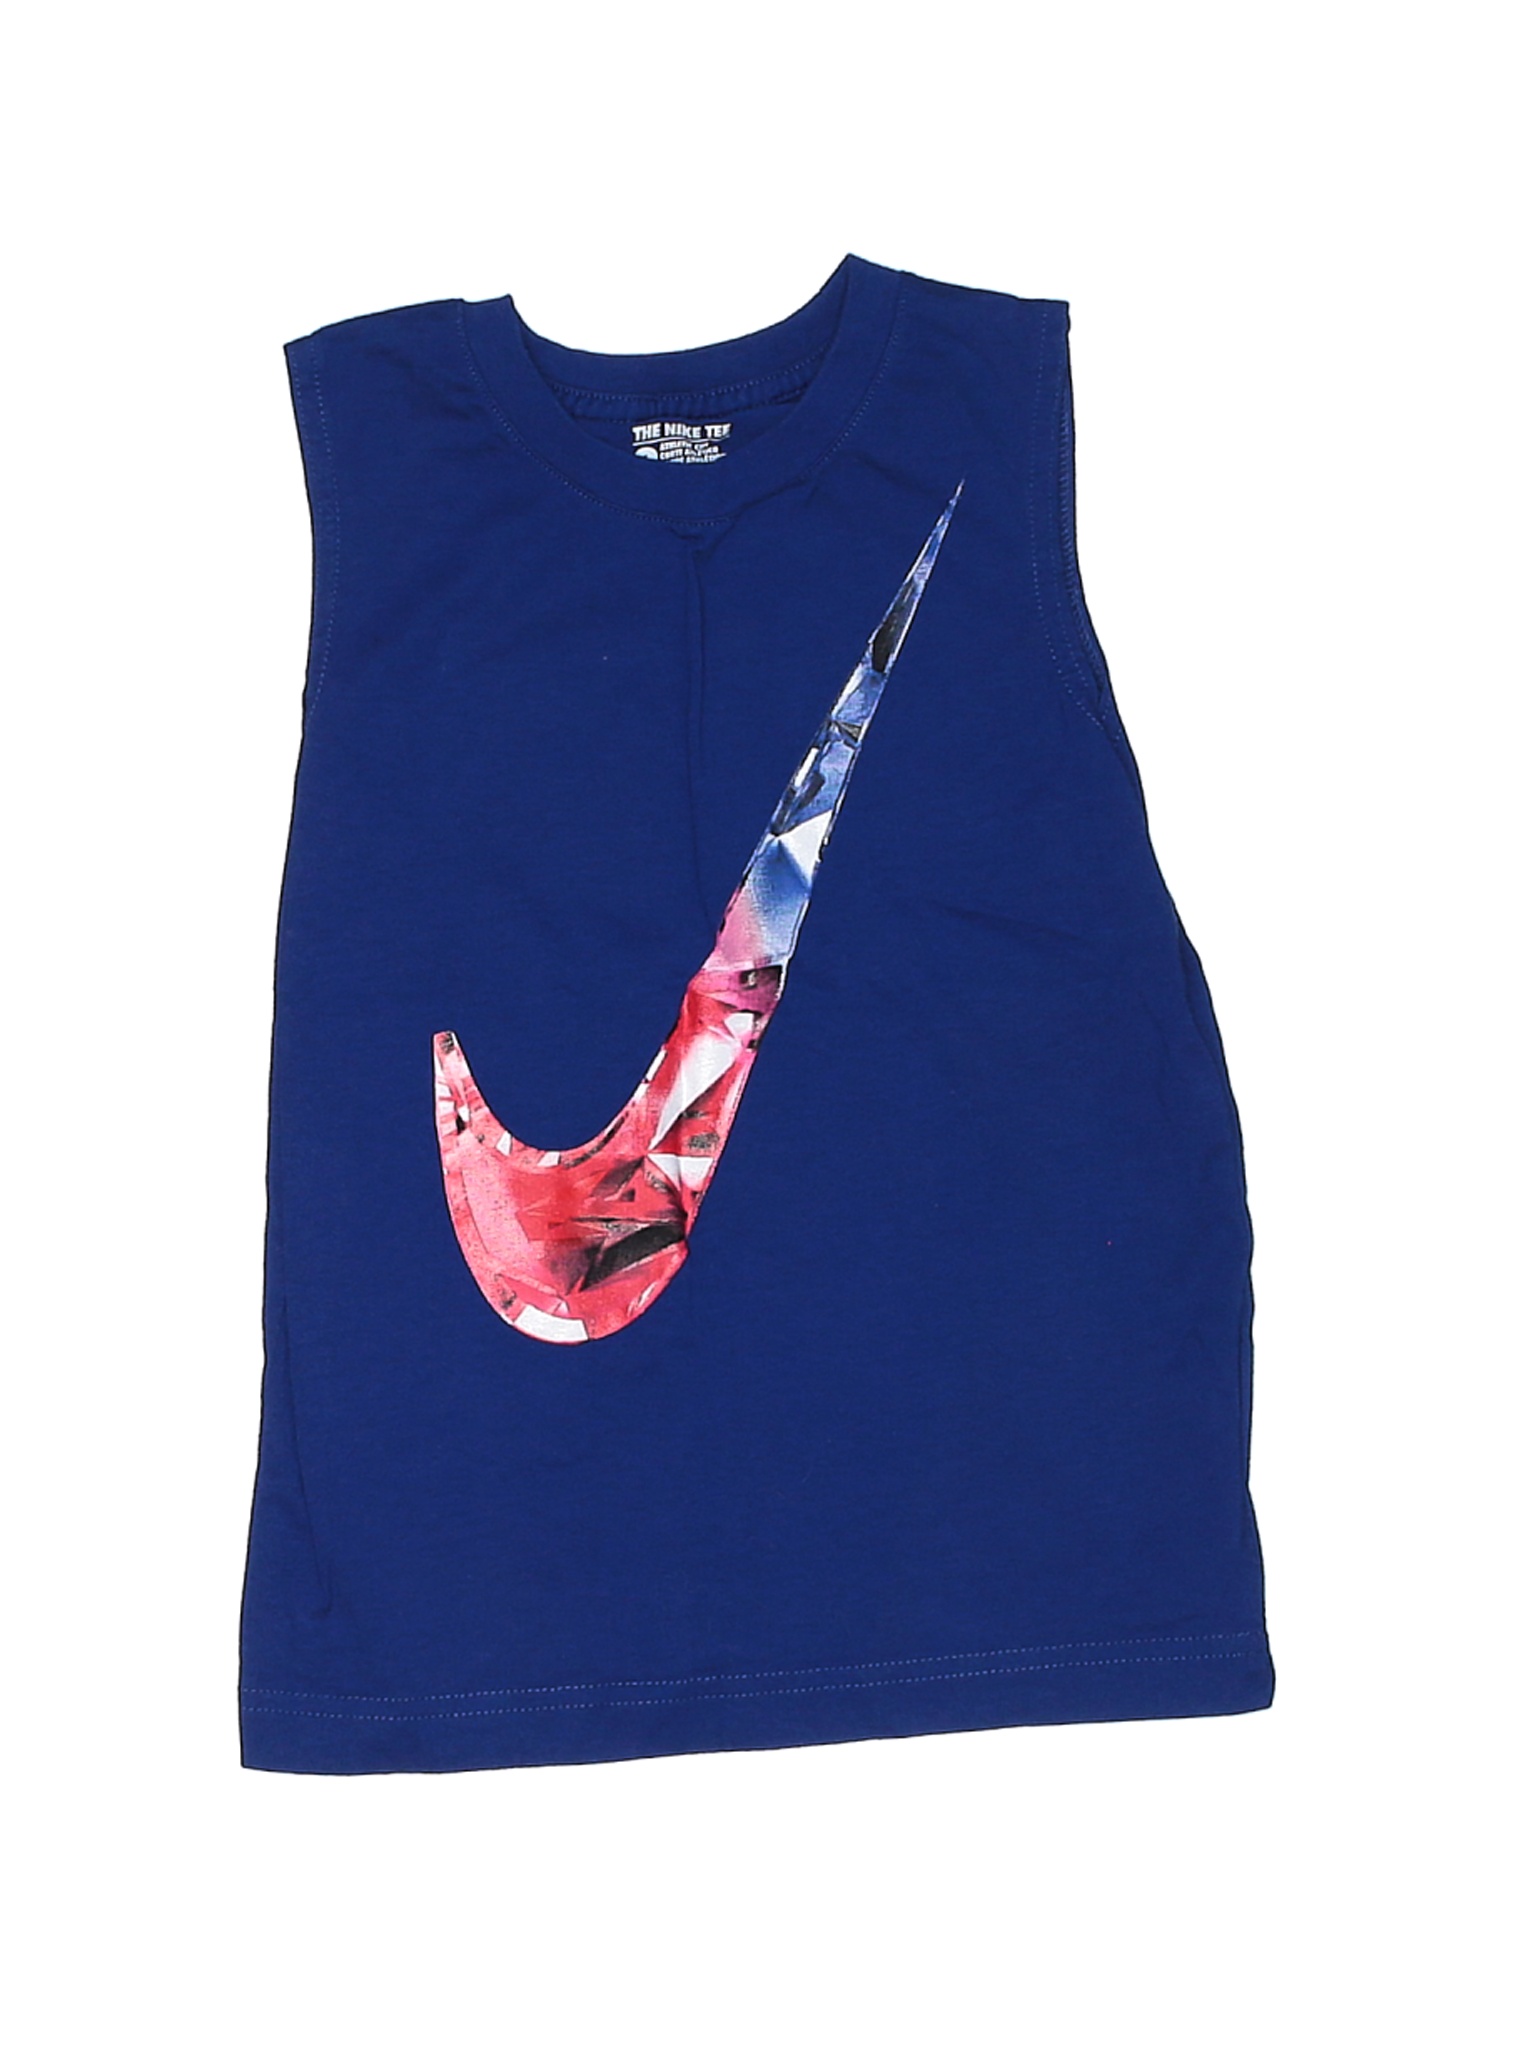 Nike Boys Blue Sleeveless T-Shirt 6 | eBay